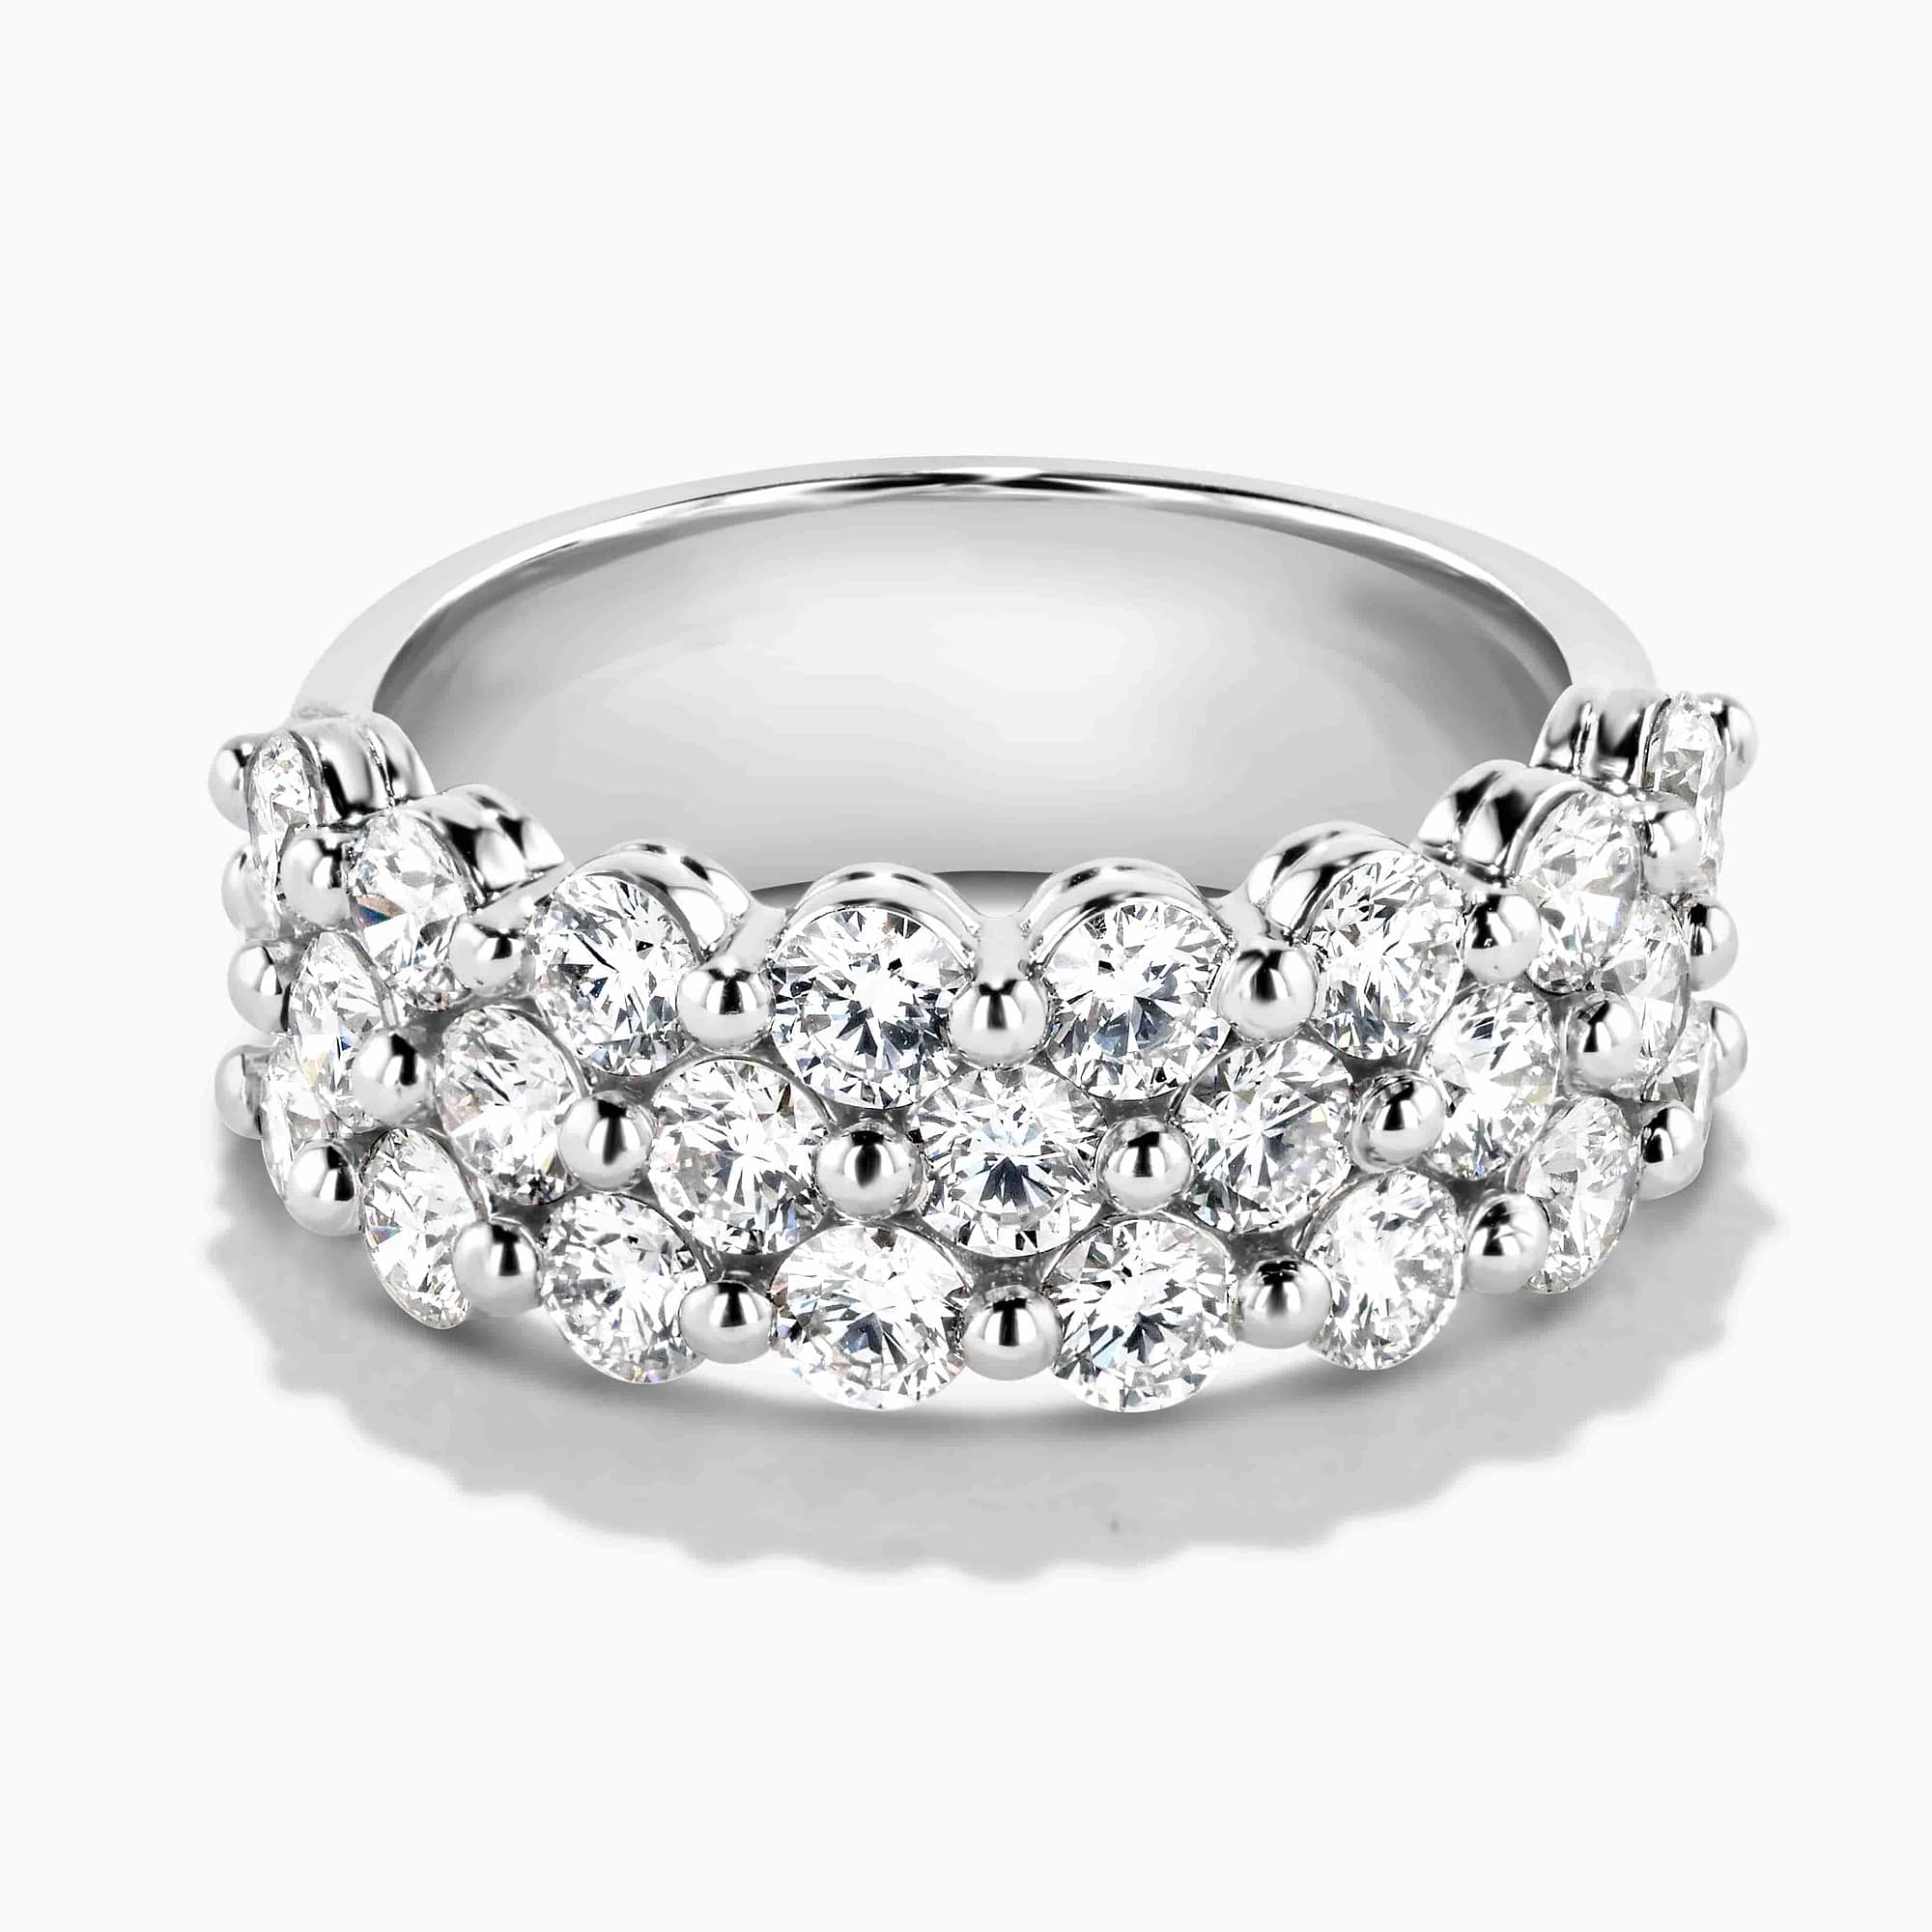 Three Row Lab Grown Diamond Band Shown In 14K White Gold|three row ring featuring lab grown diamonds by MiaDonna